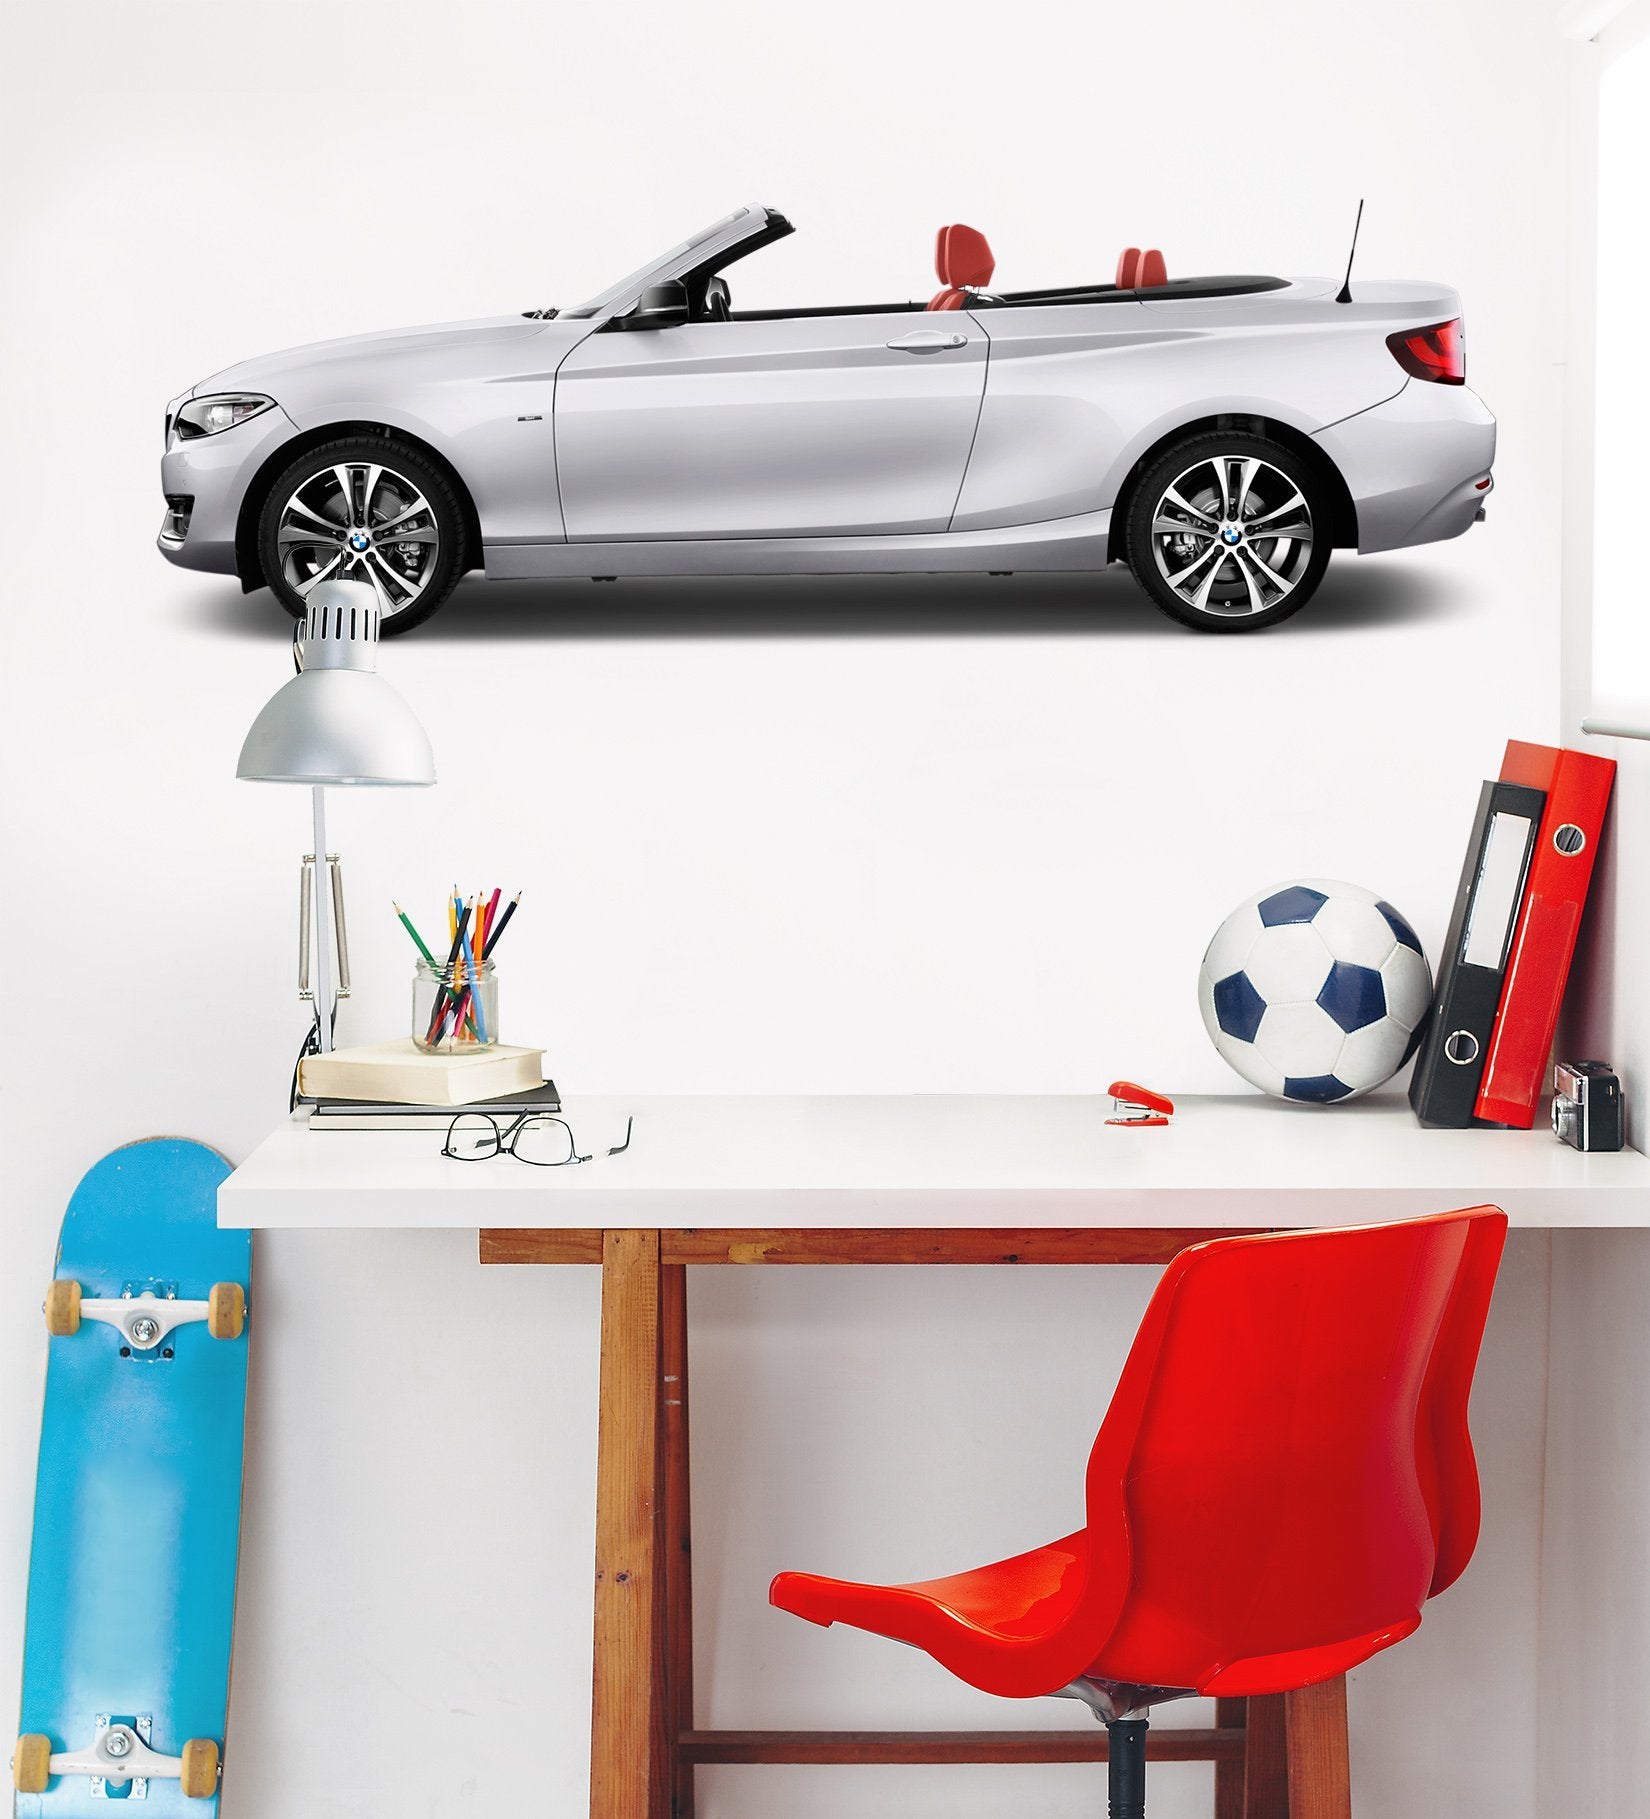 3D Opel Vivaro 207 Vehicles Wallpaper AJ Wallpaper 